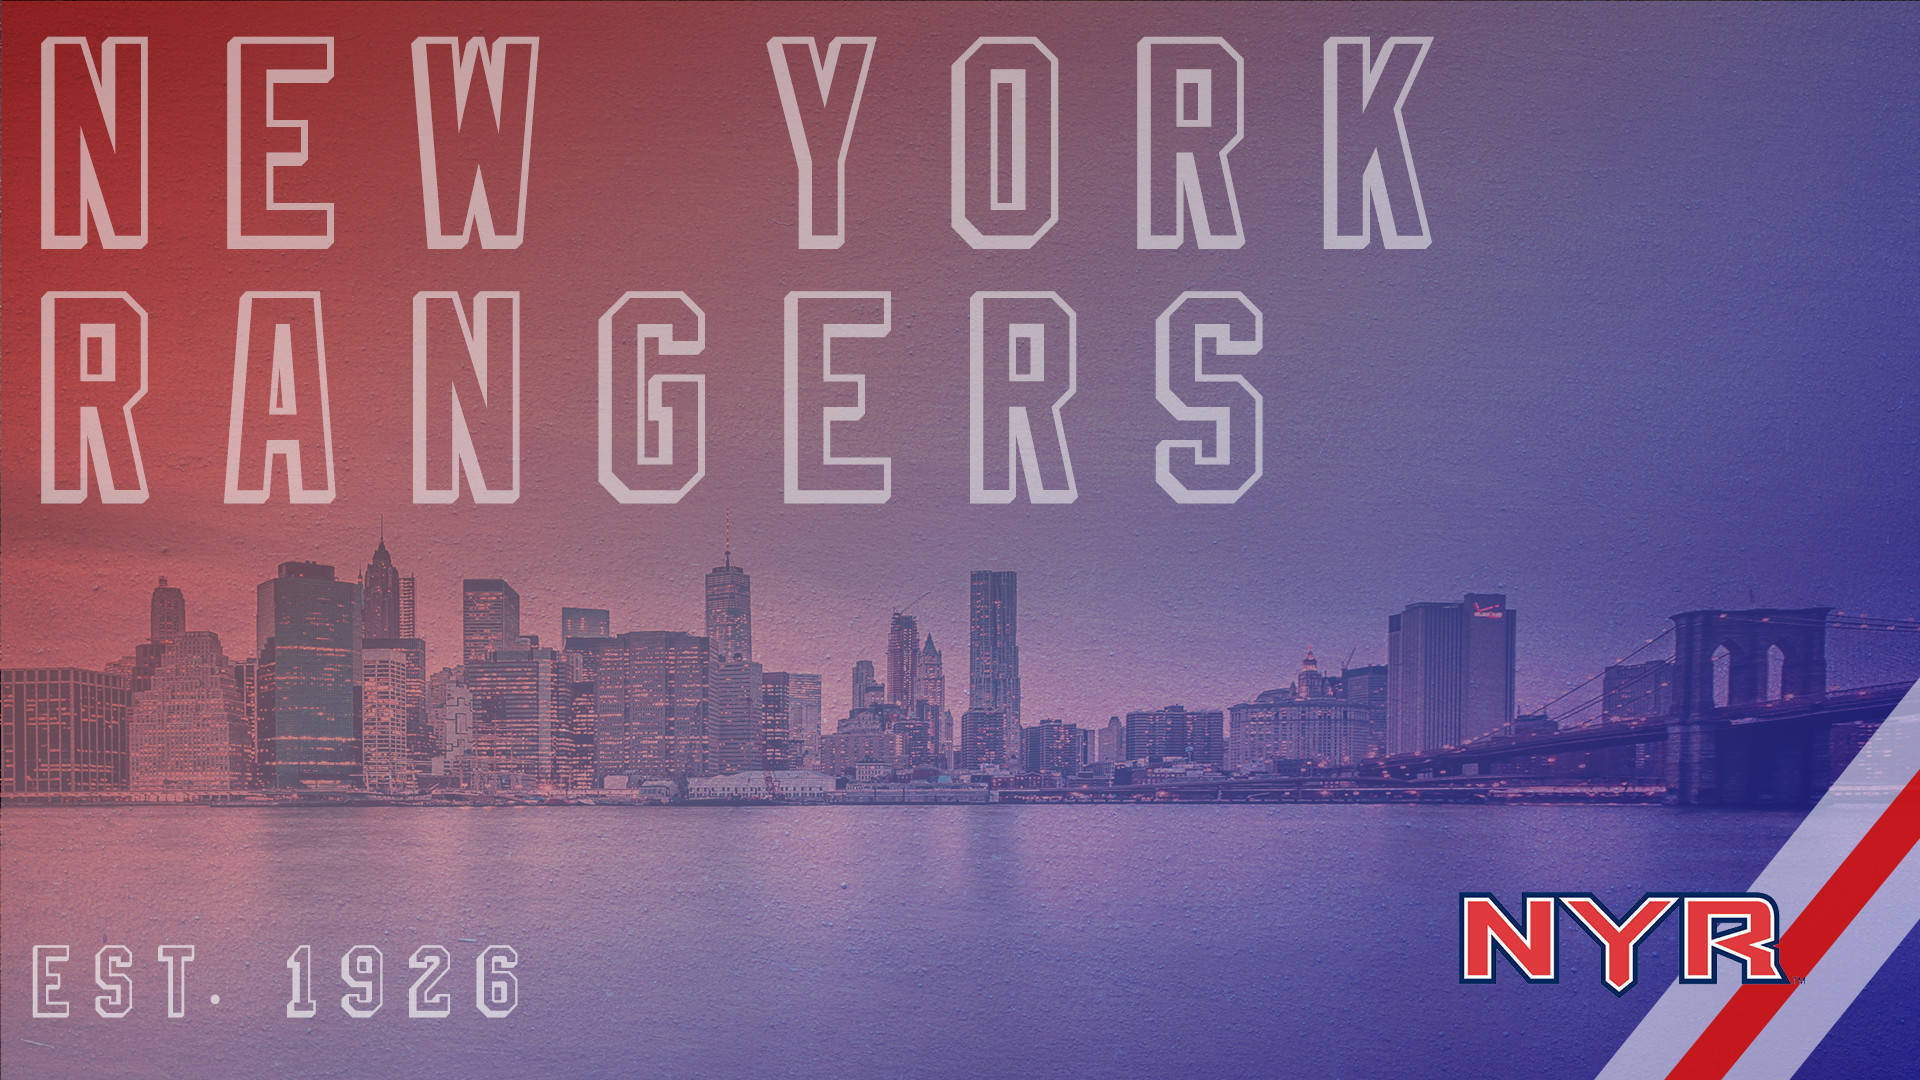 Established 1926 New York Rangers Background